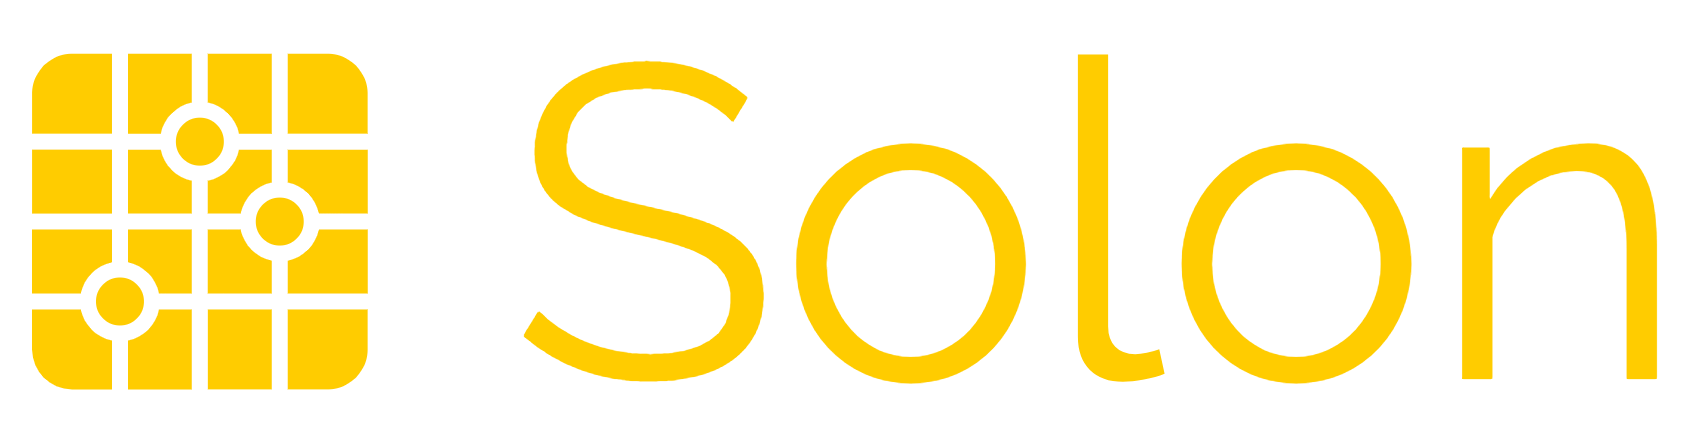 Solon-logo-web